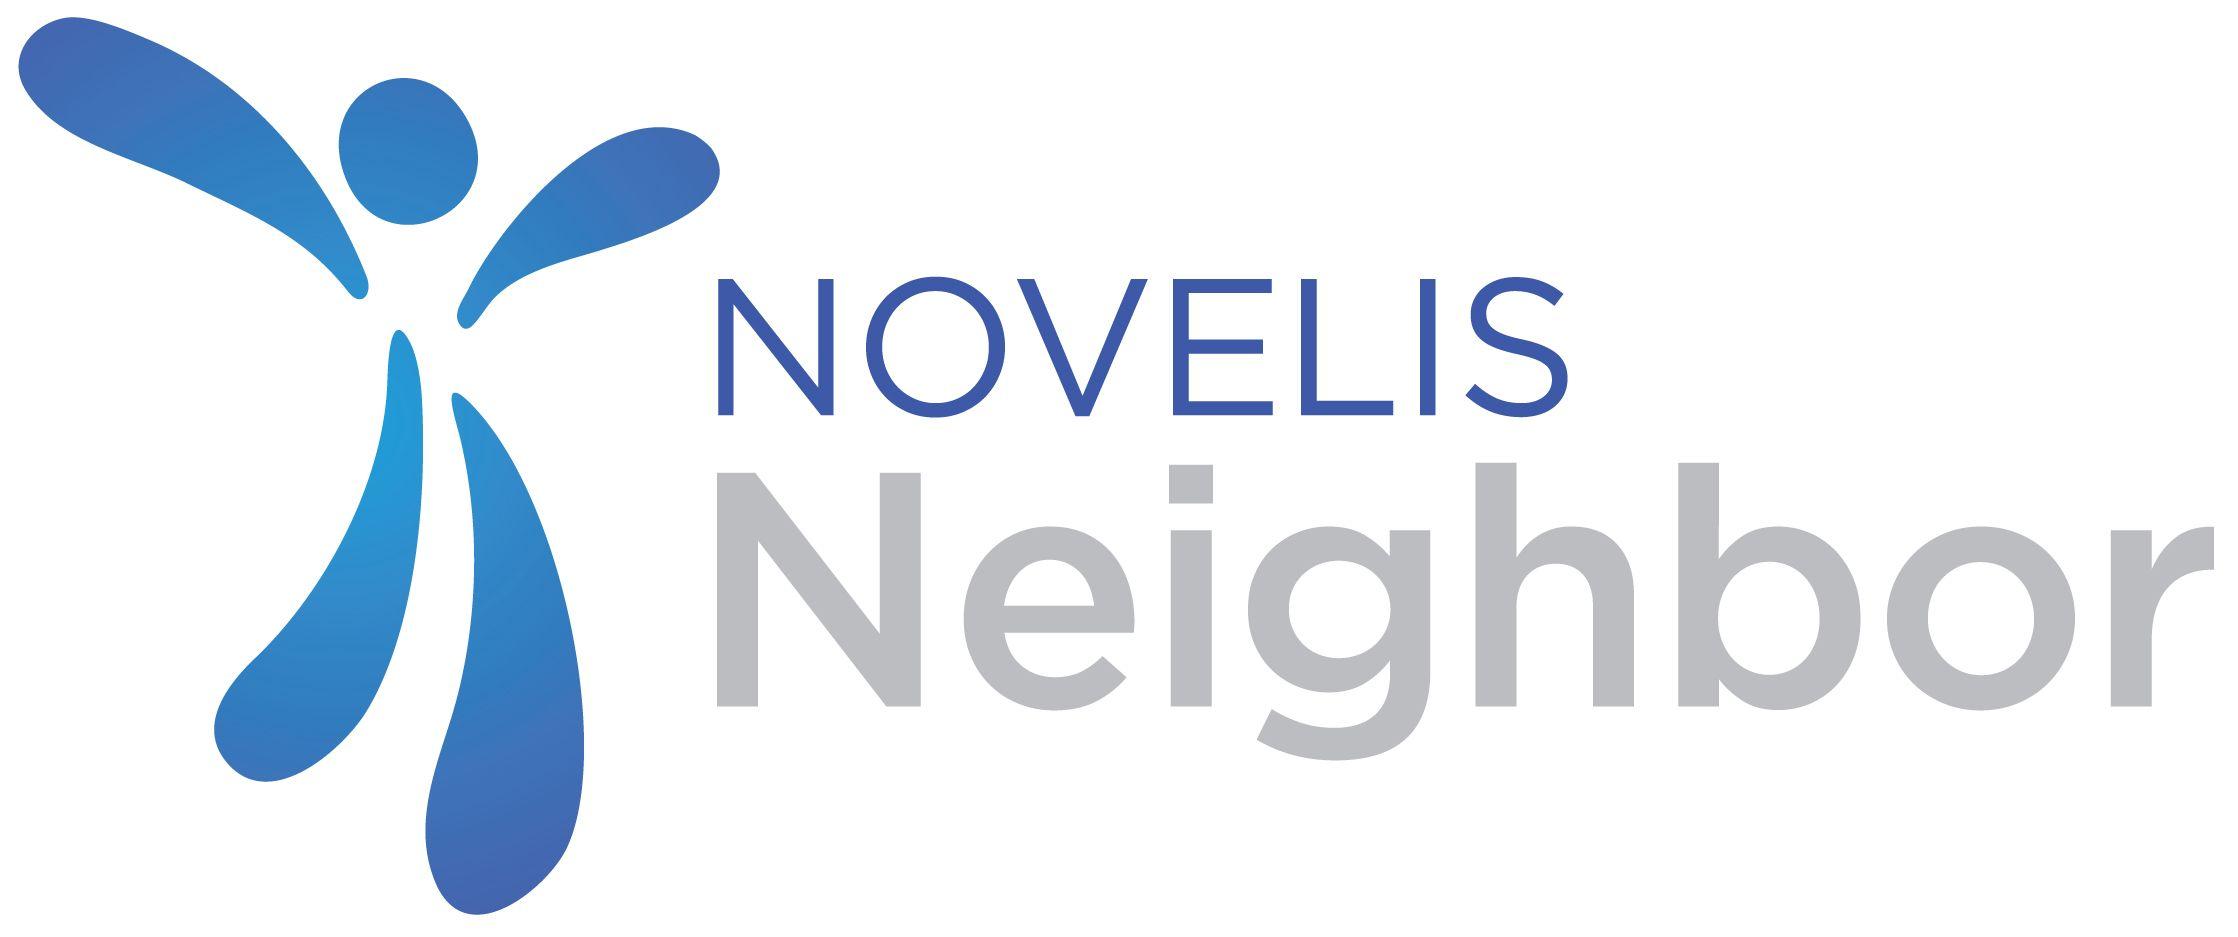 Novelis Logo - Community Service